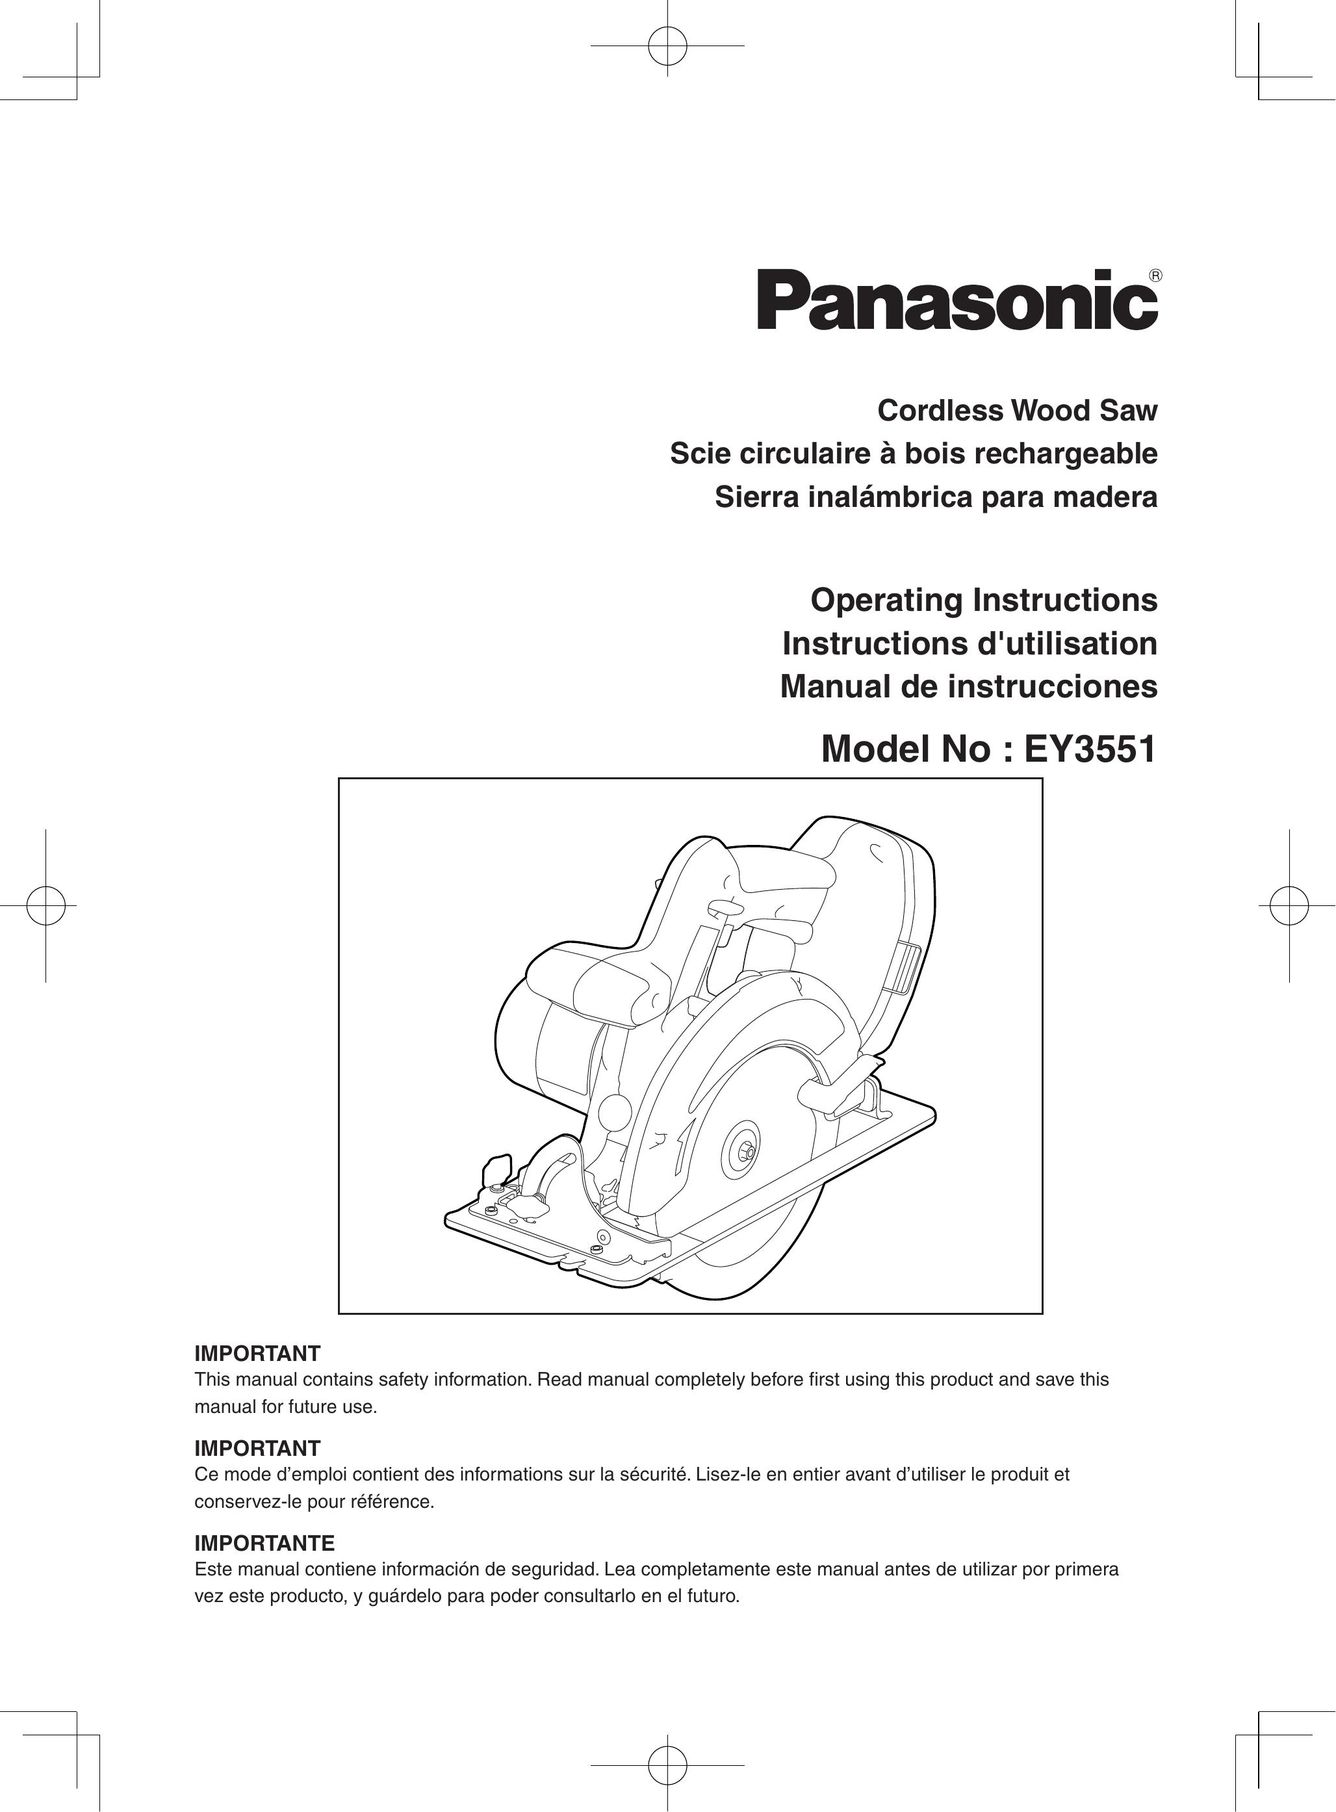 Panasonic EY3551 Cordless Saw User Manual